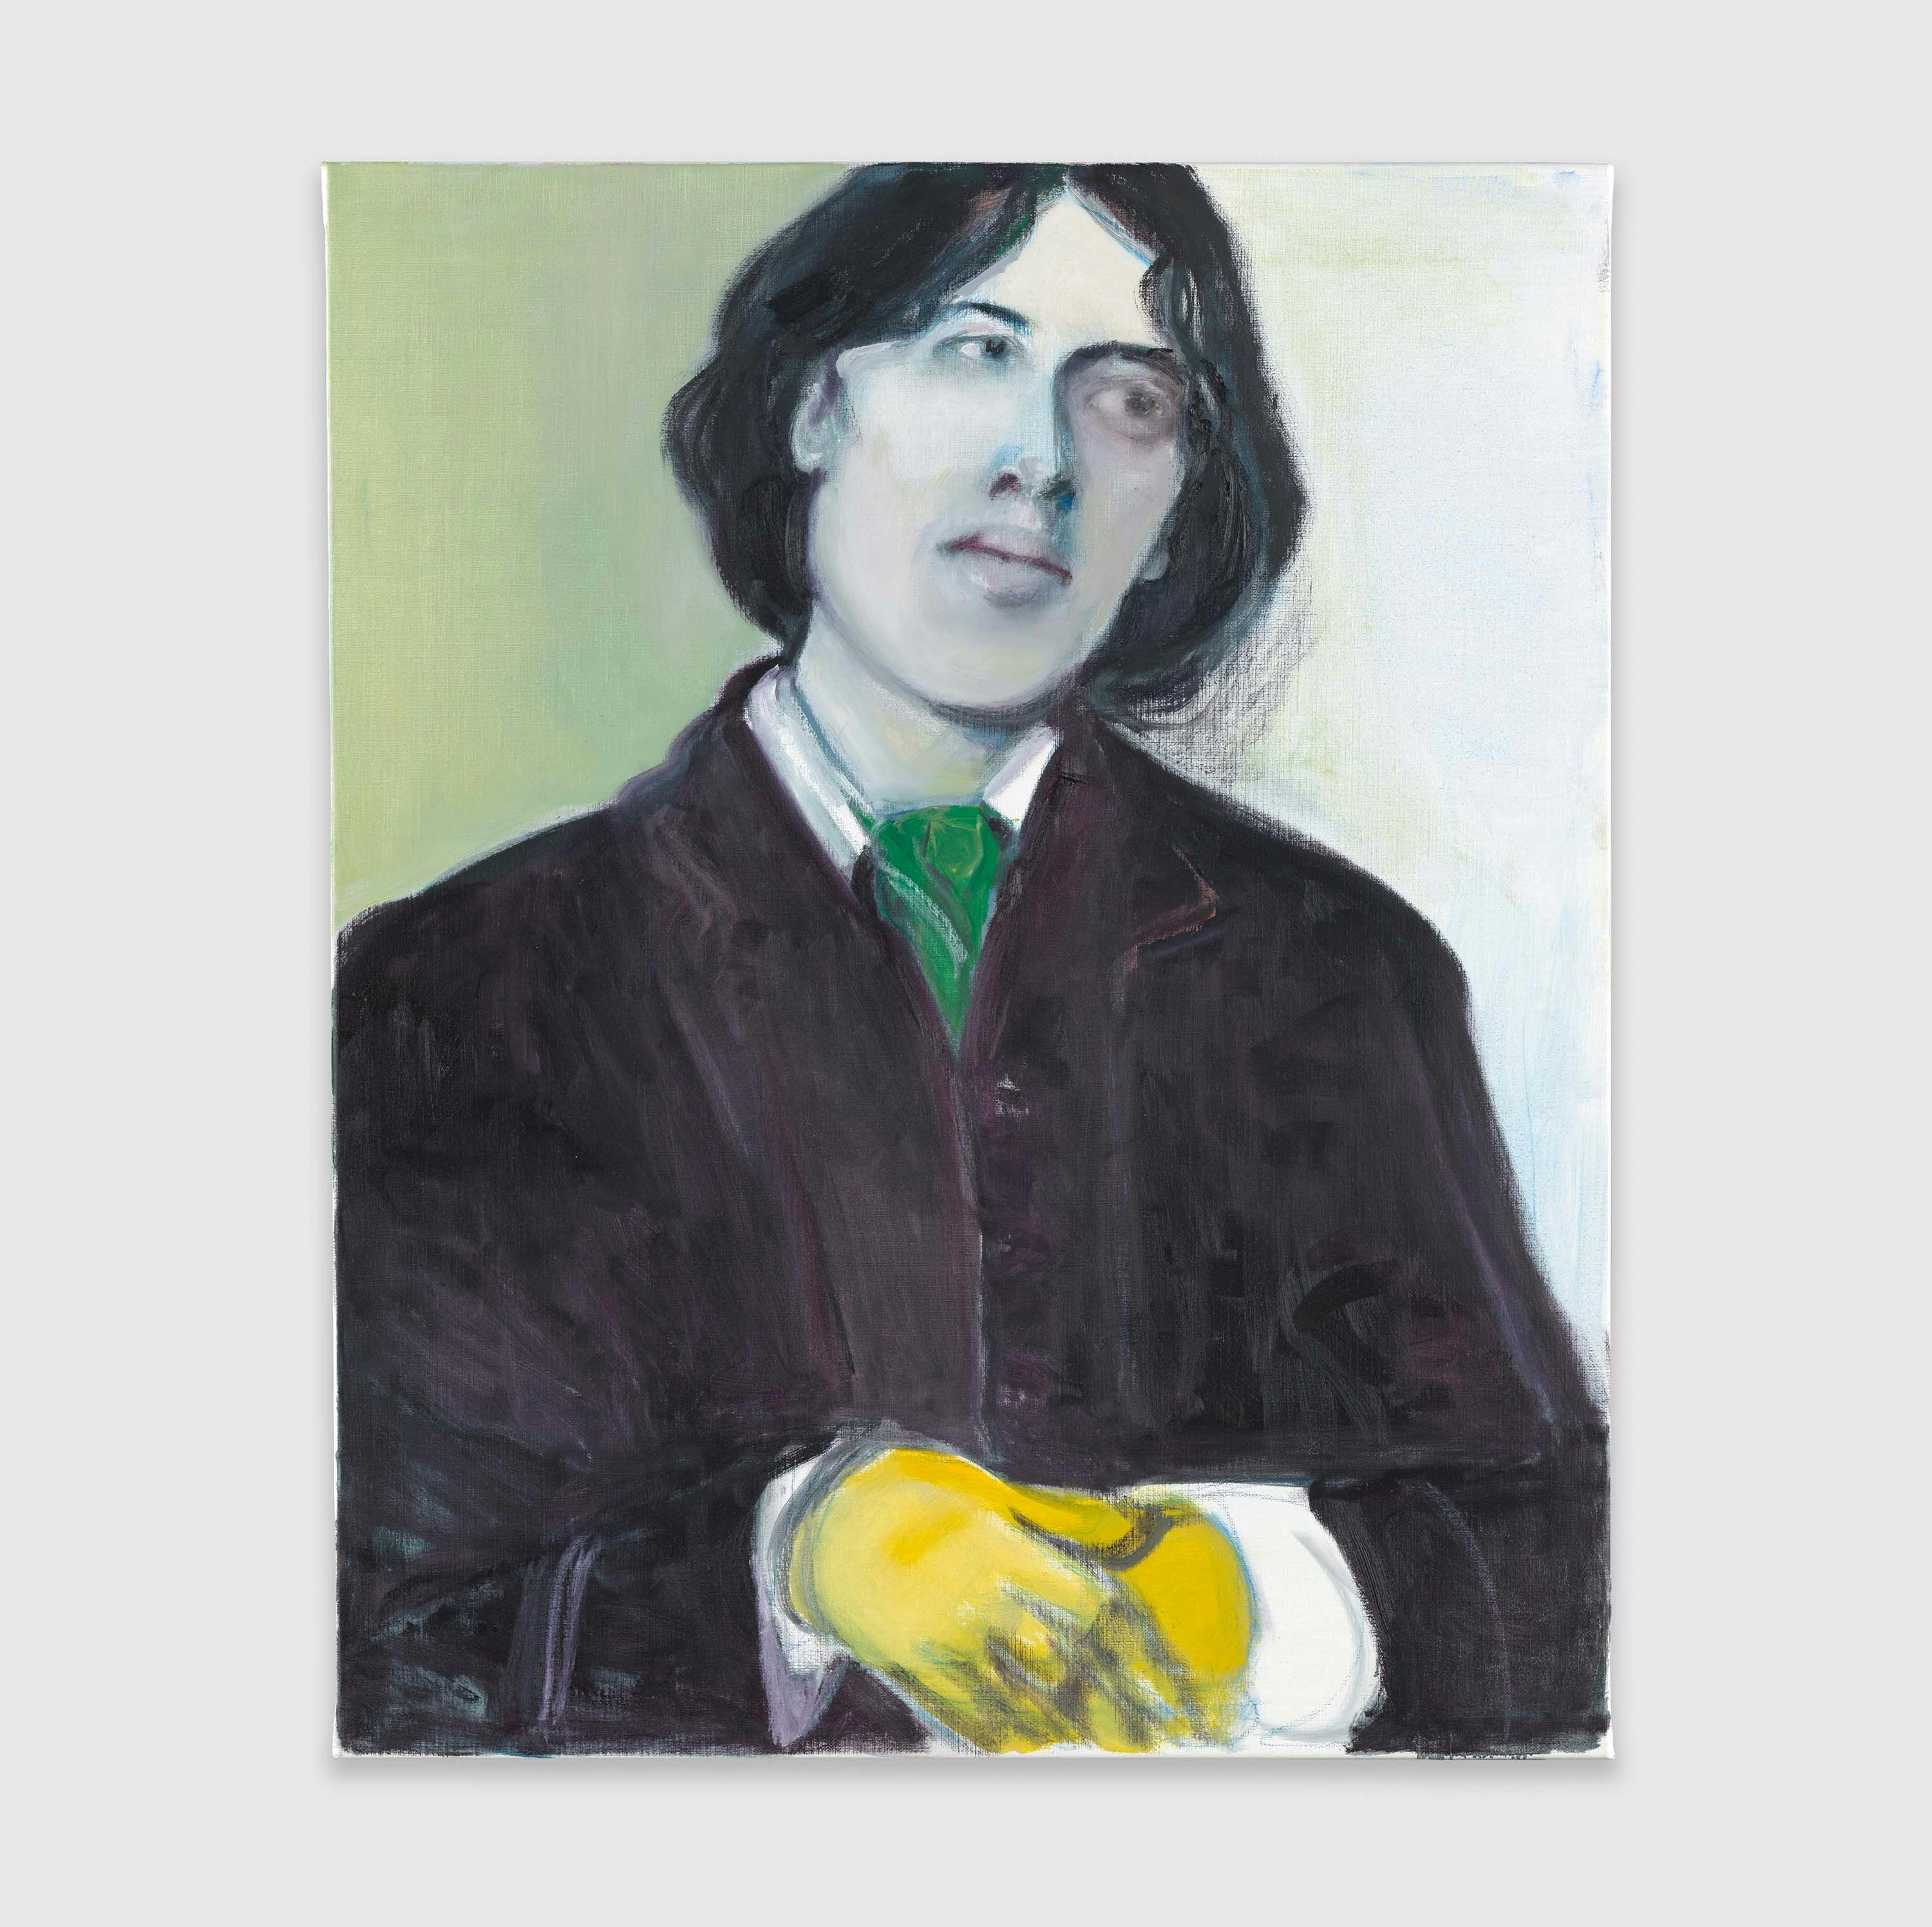 An oil on canvas painting by Marlene Dumas, titled Oscar Wilde, dated 2016.